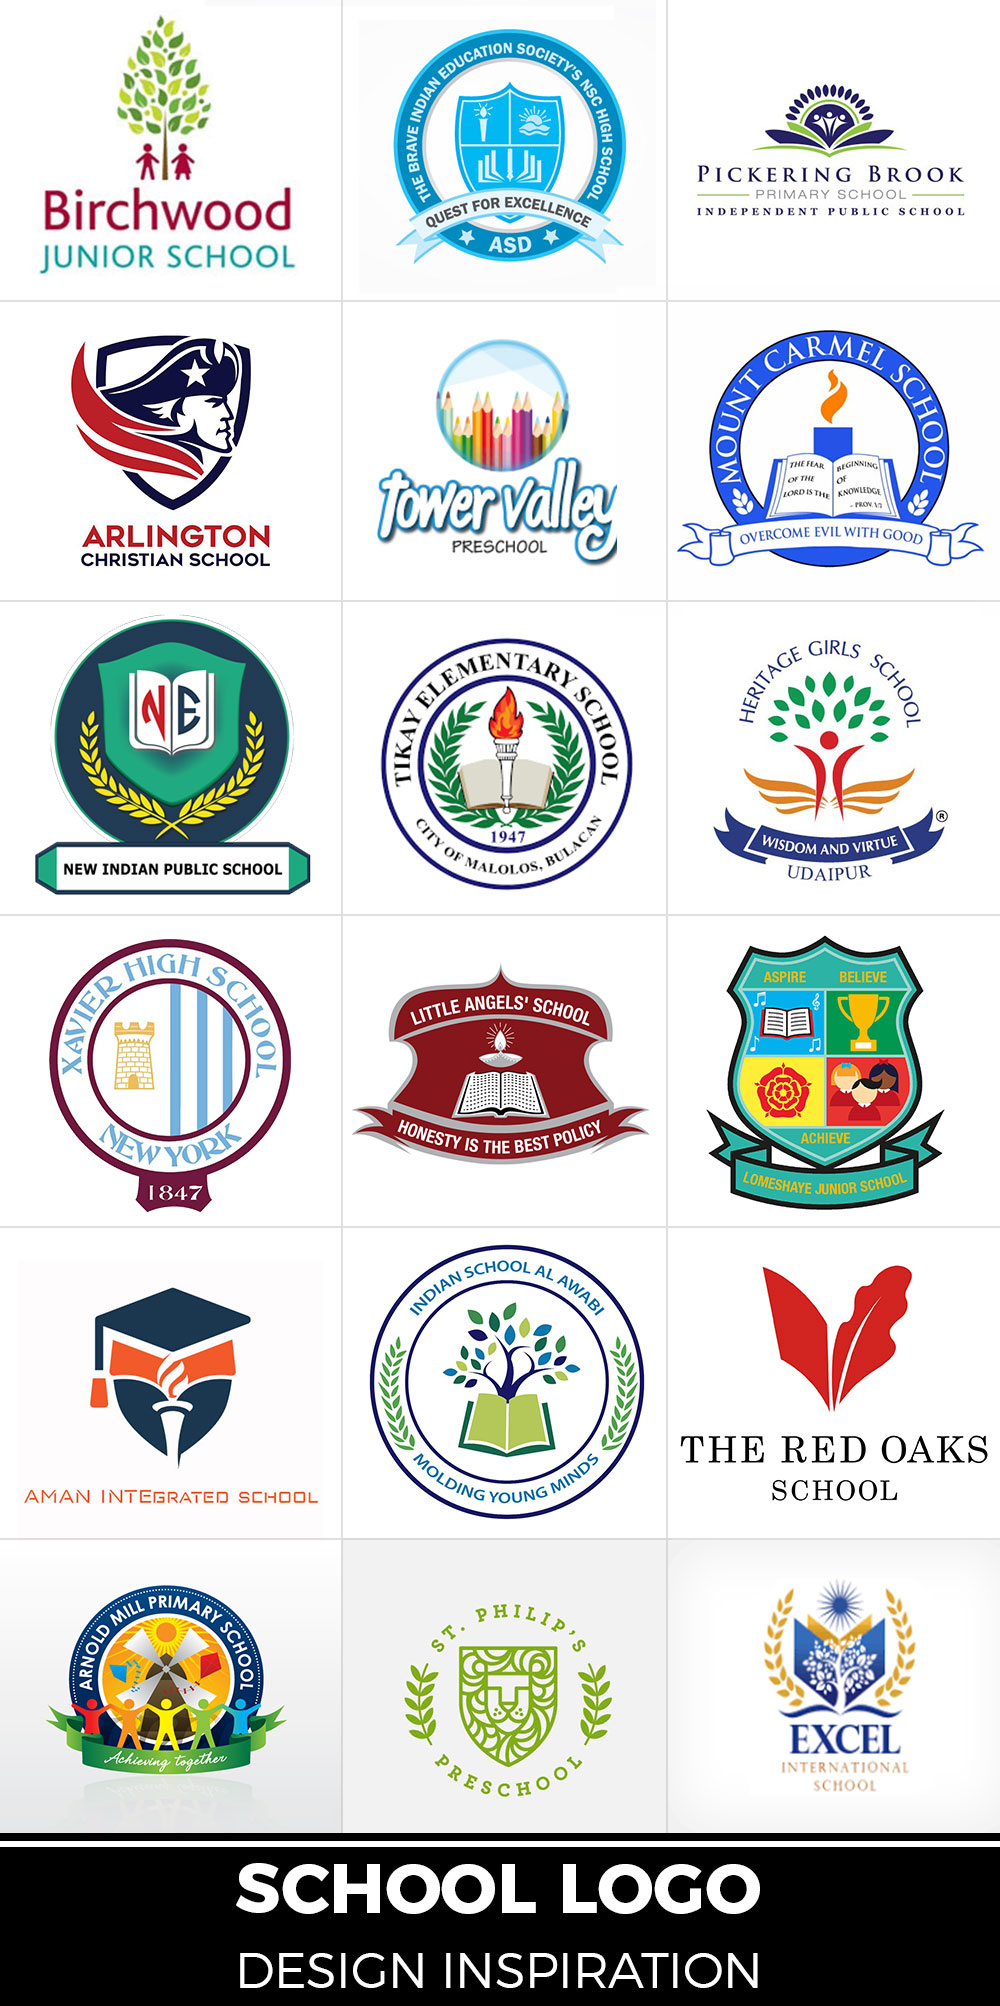 Top 10 school logo ideas and inspiration